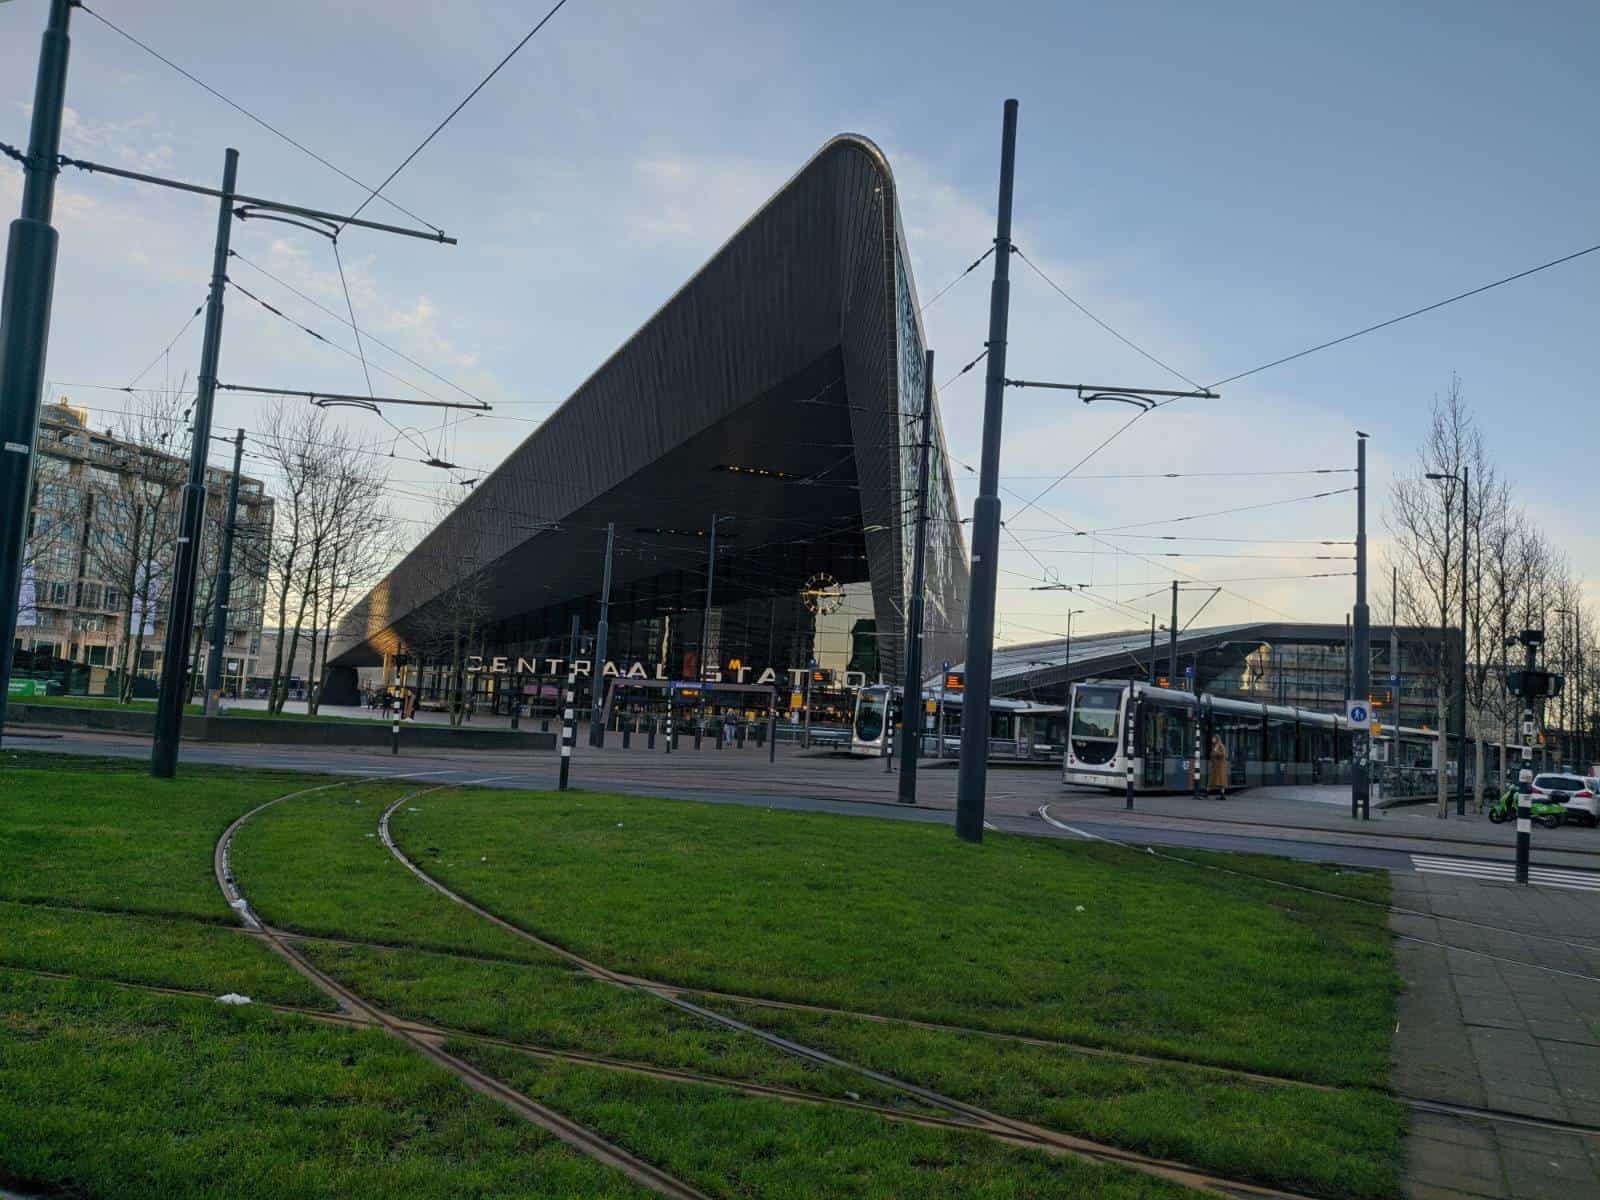 Rotterdam’s Centraal Station